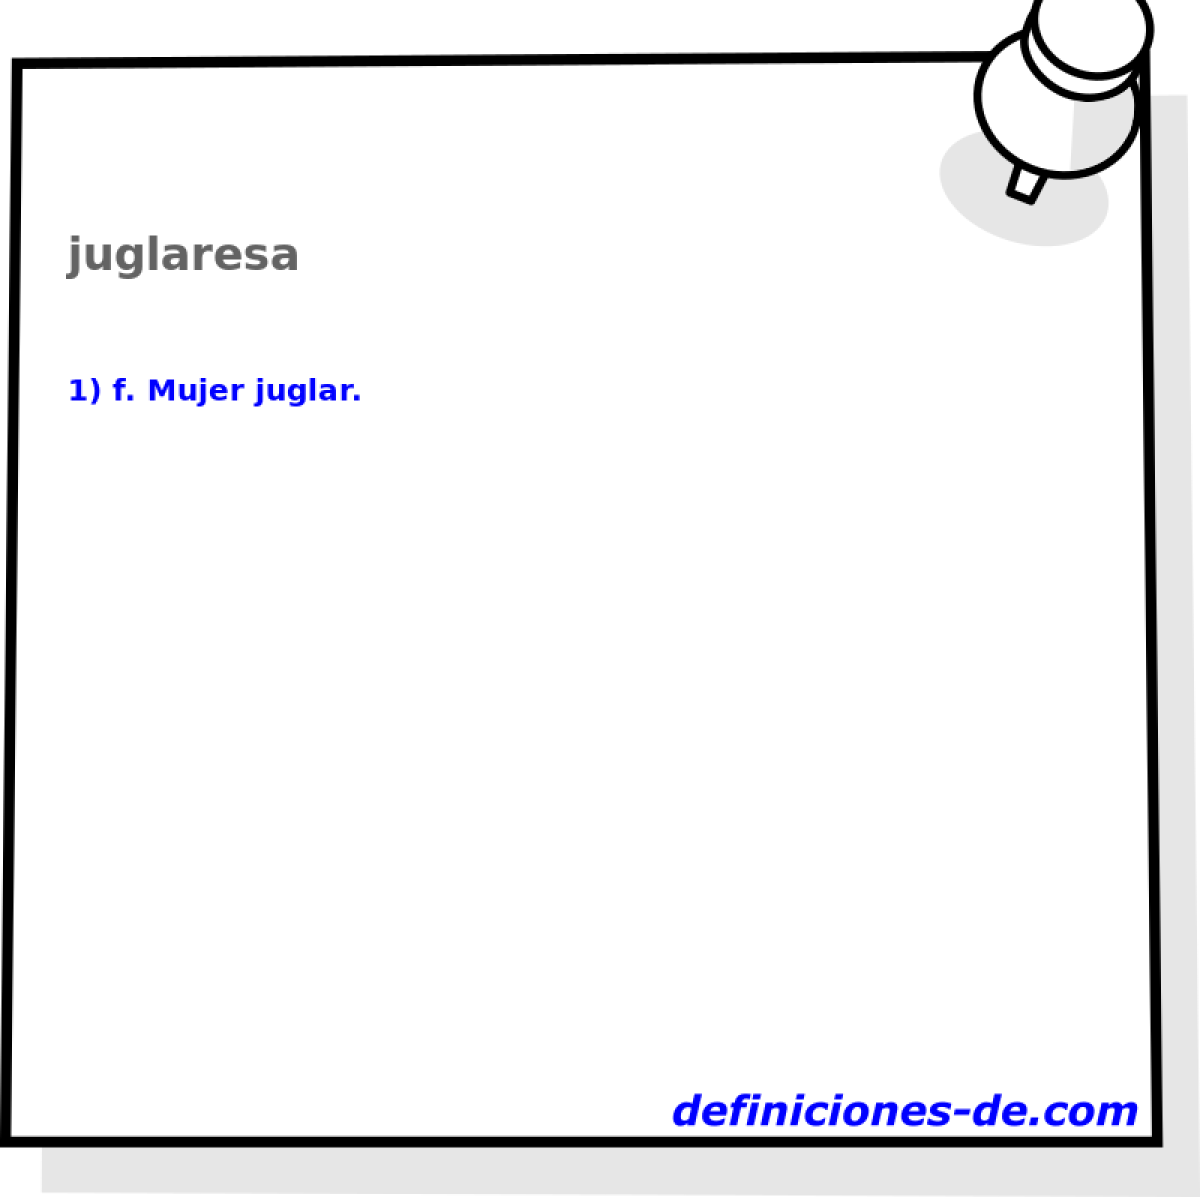 juglaresa 